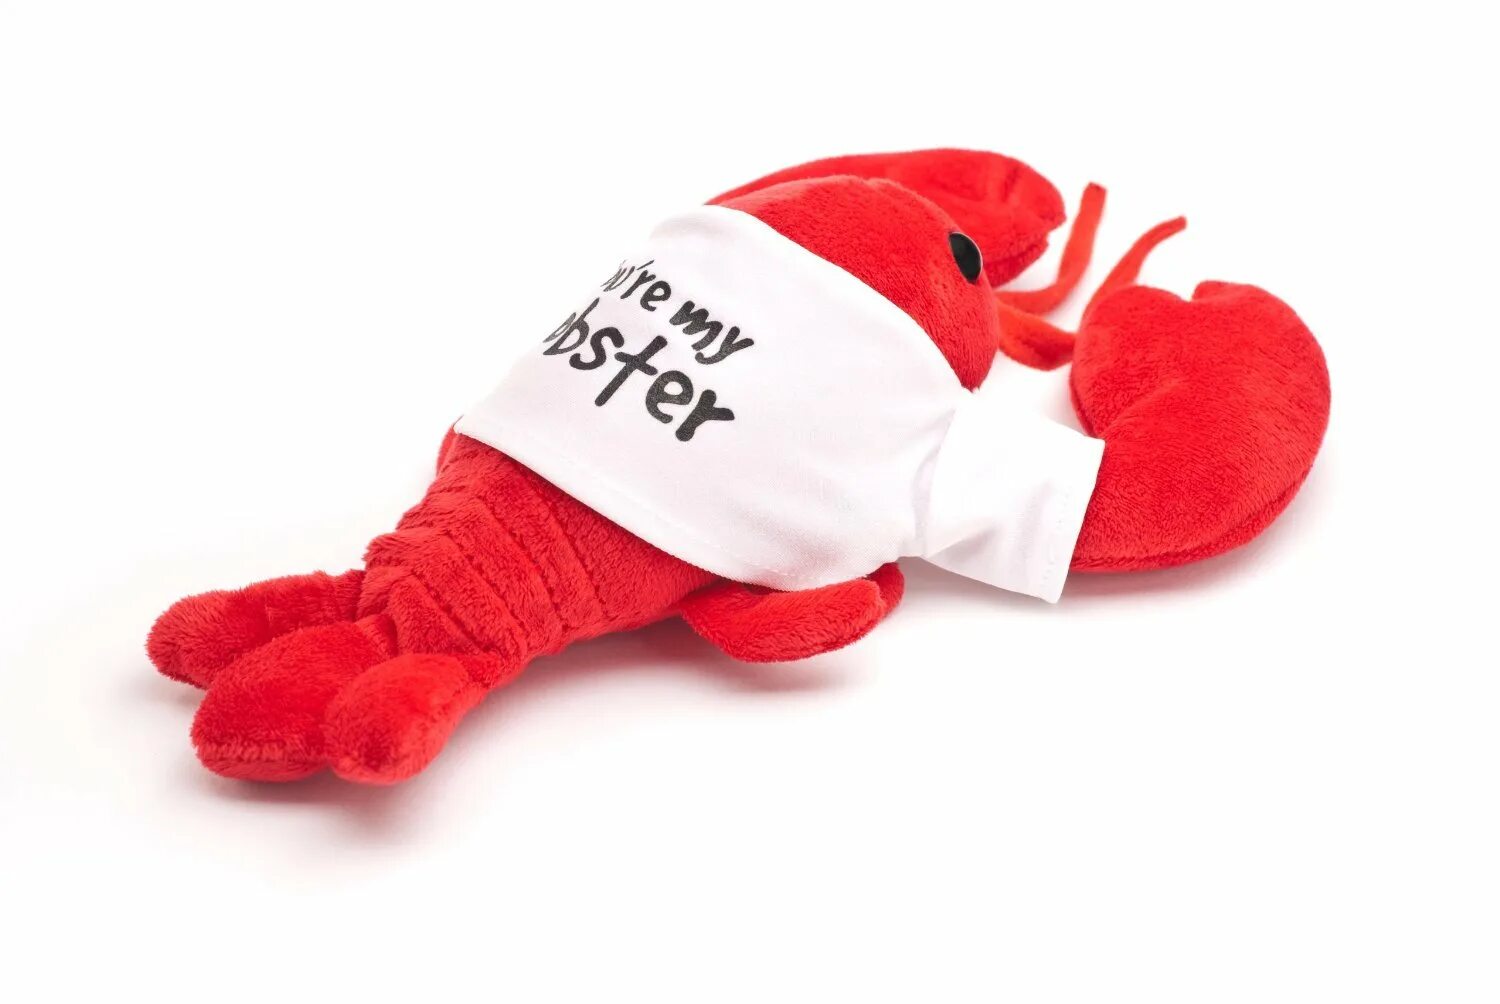 Friends Lobster. Jibbitz лобстер. Прихватки лобстеры из друзей. You are my Lobster.